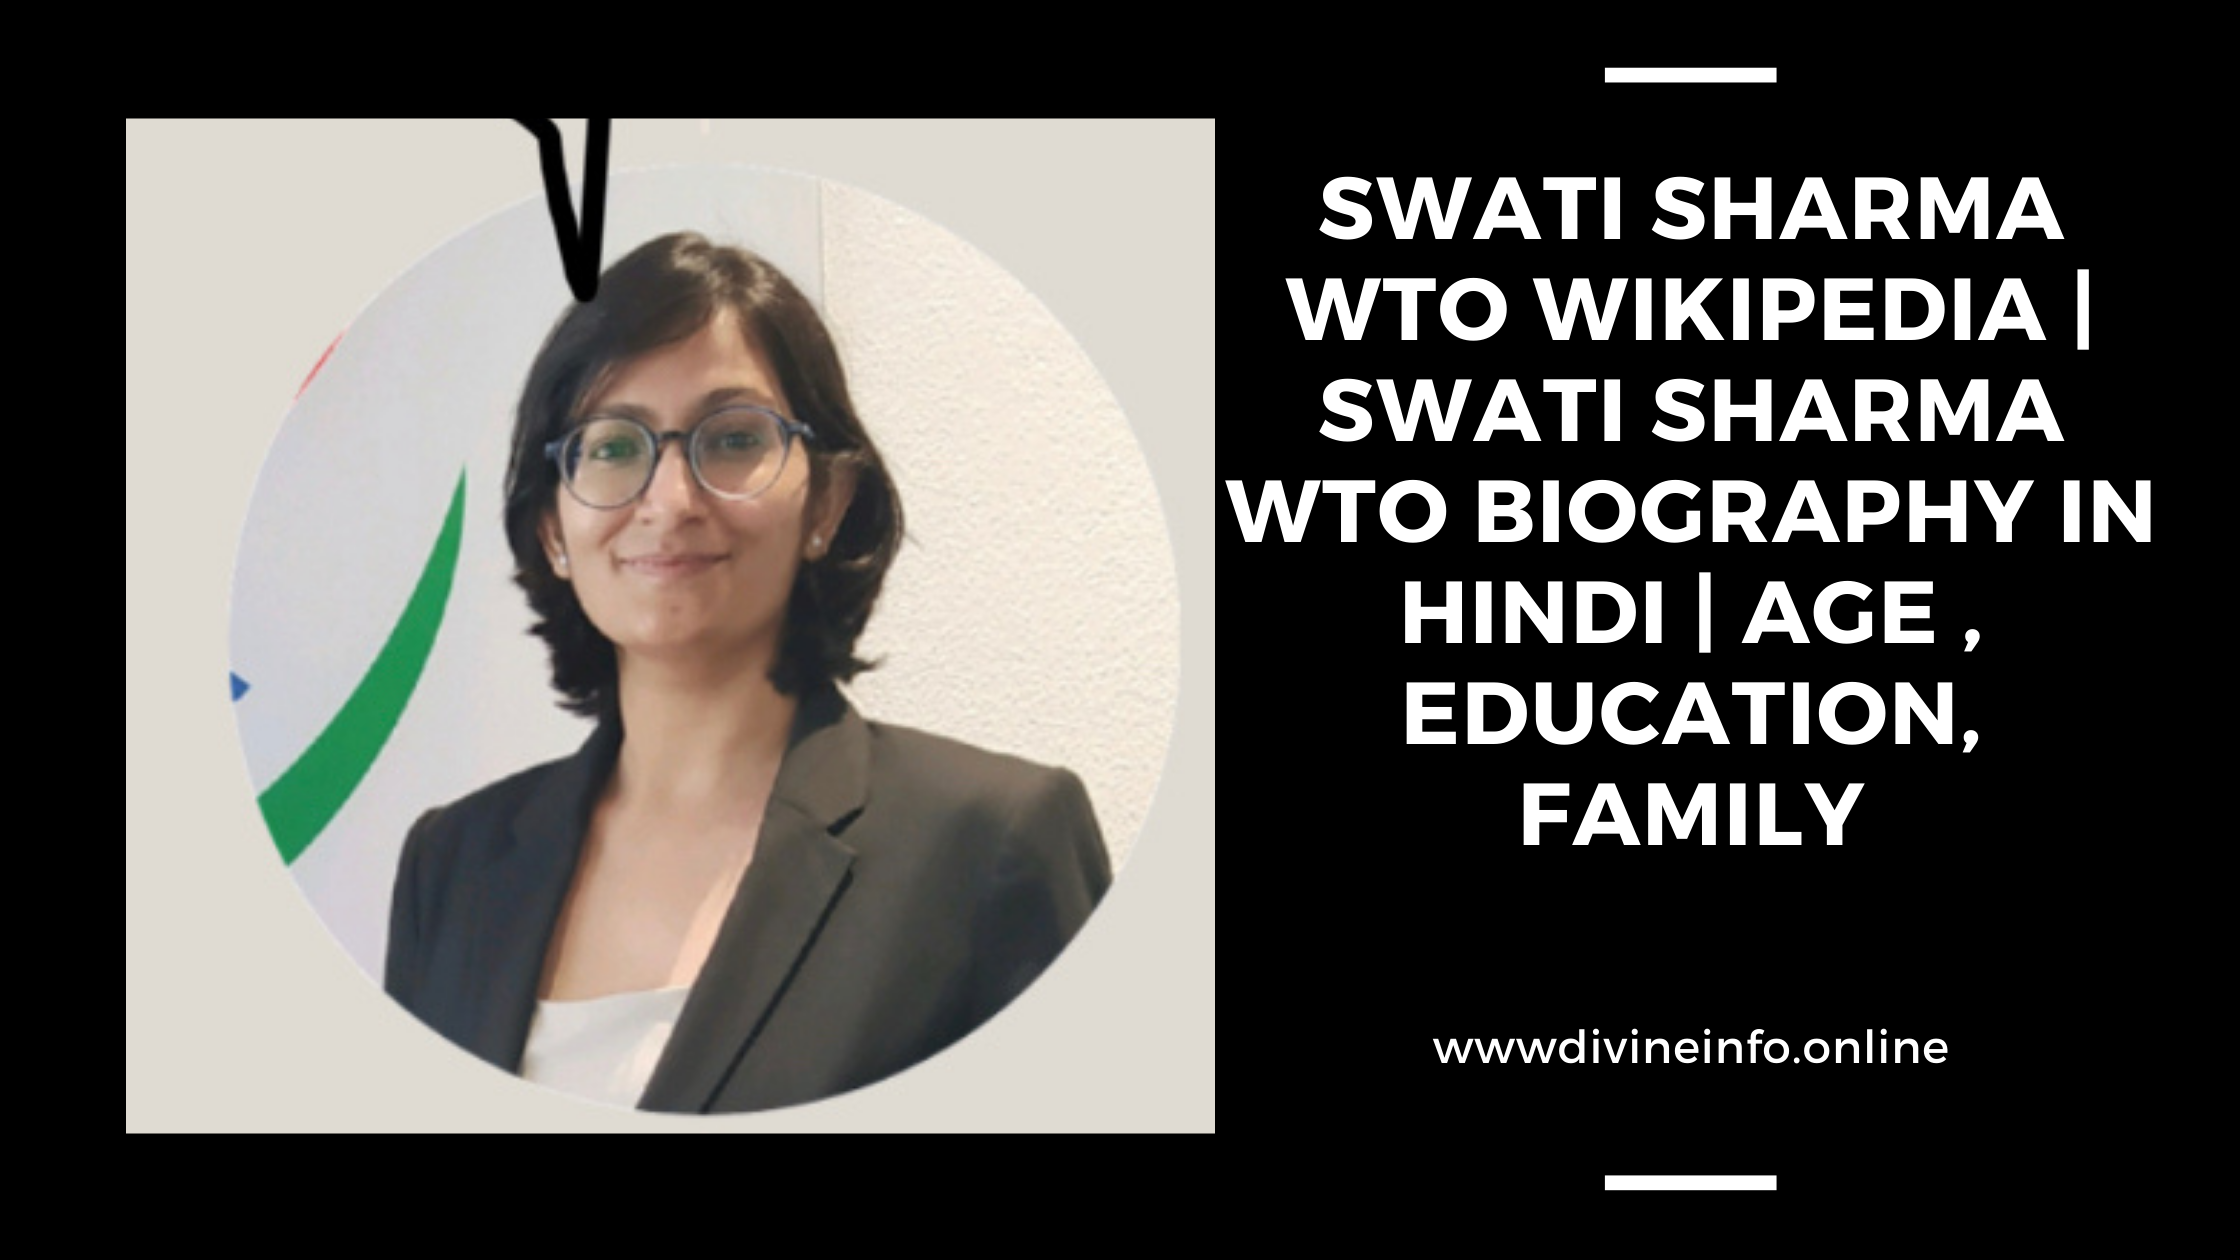 Swati sharma wto wikipedia |  Swati sharma wto Biography in hindi | age , education, family